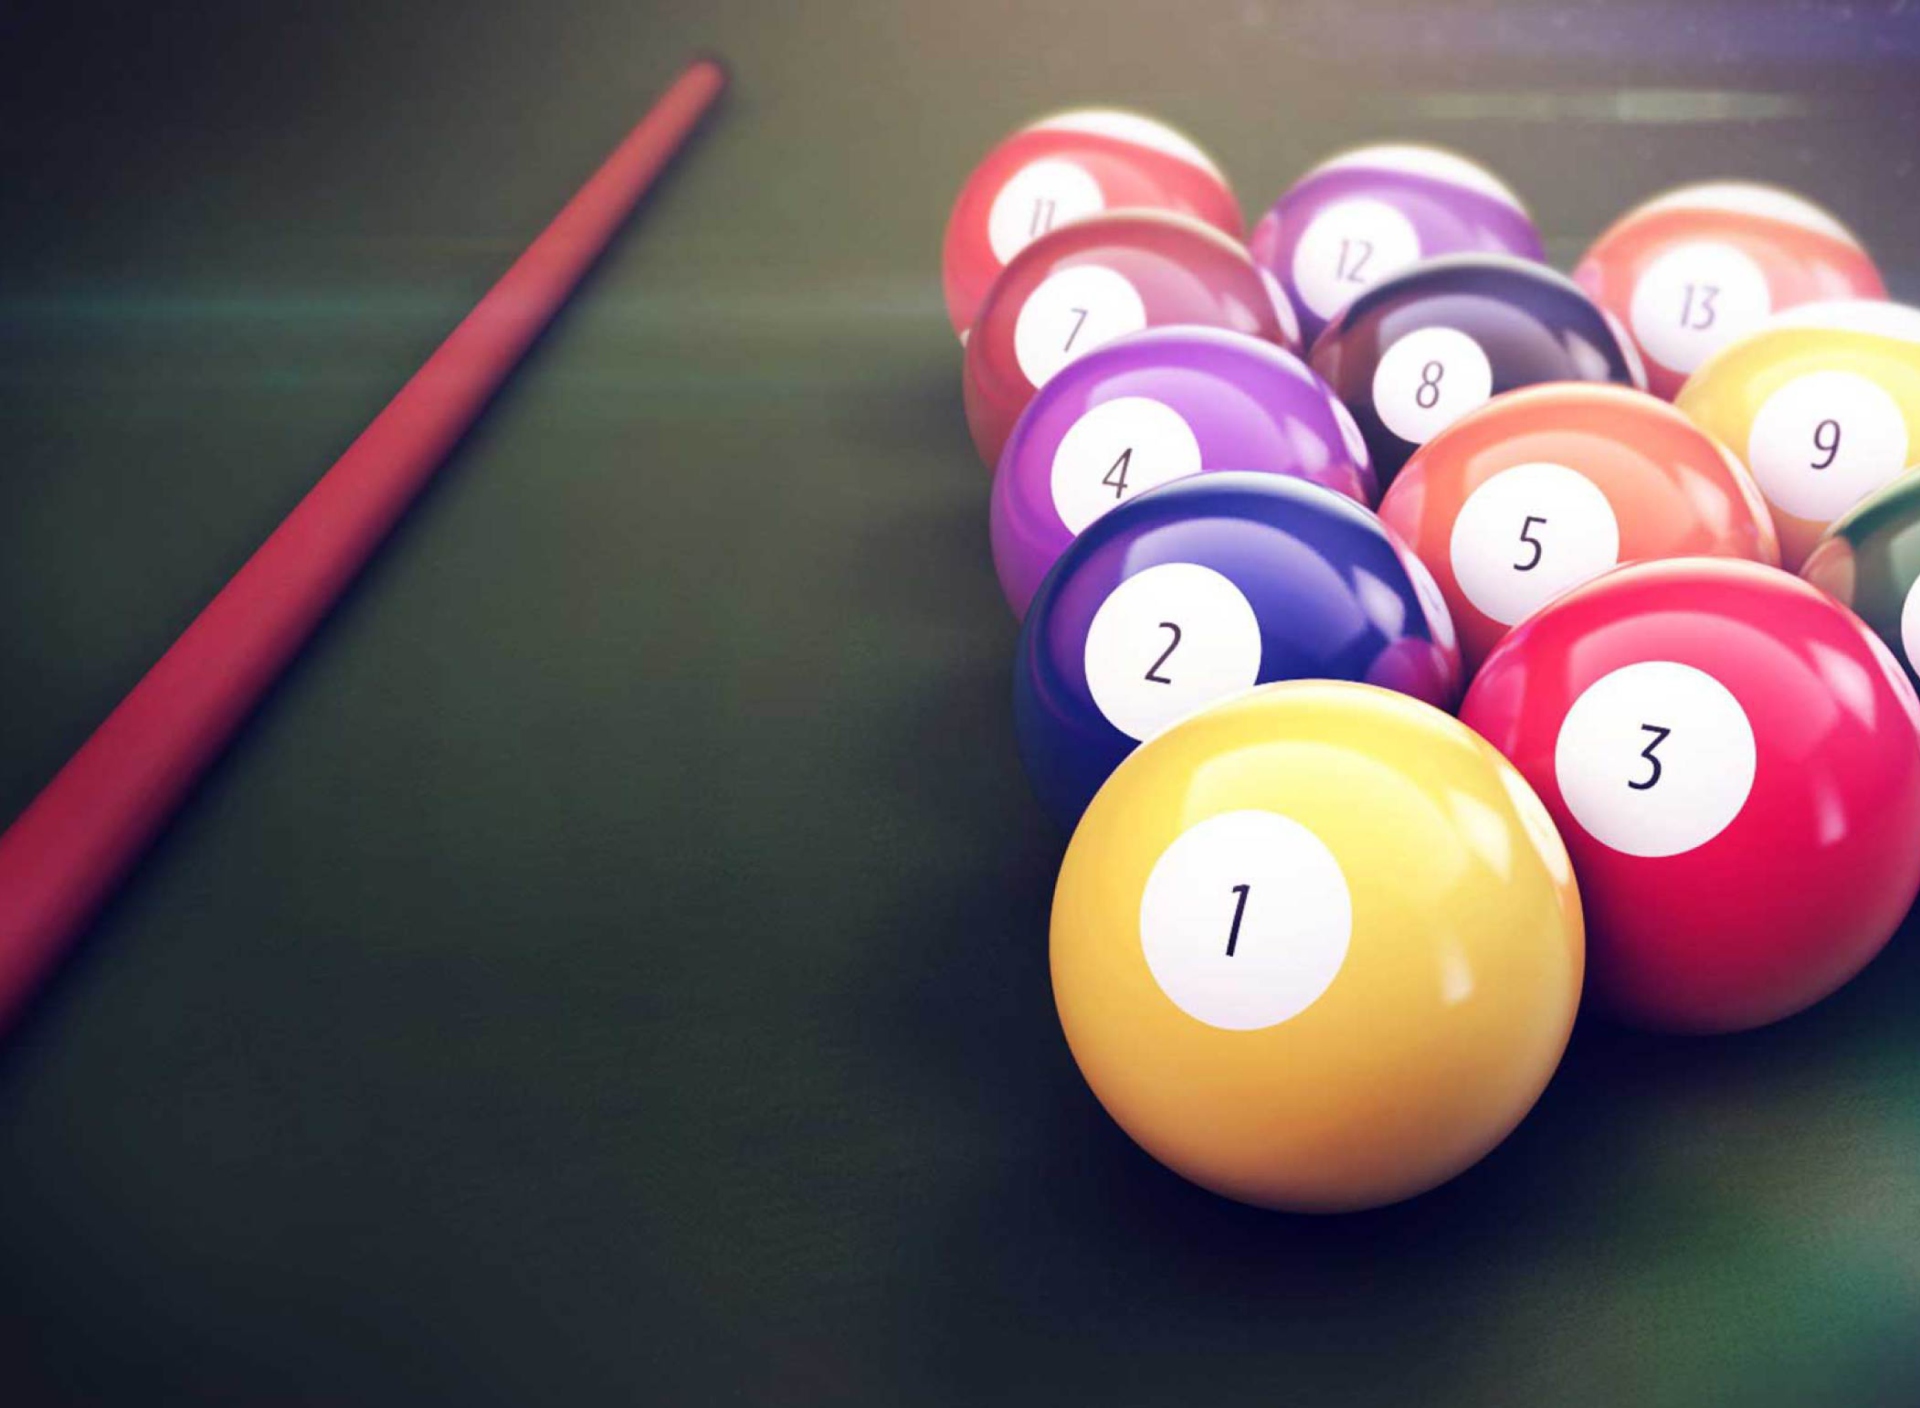 Бильярдный шар 4. Бильярд "9 Ball Pool". Бильярдные шары на столе. Бильярд фон. Необычный бильярдный шар.